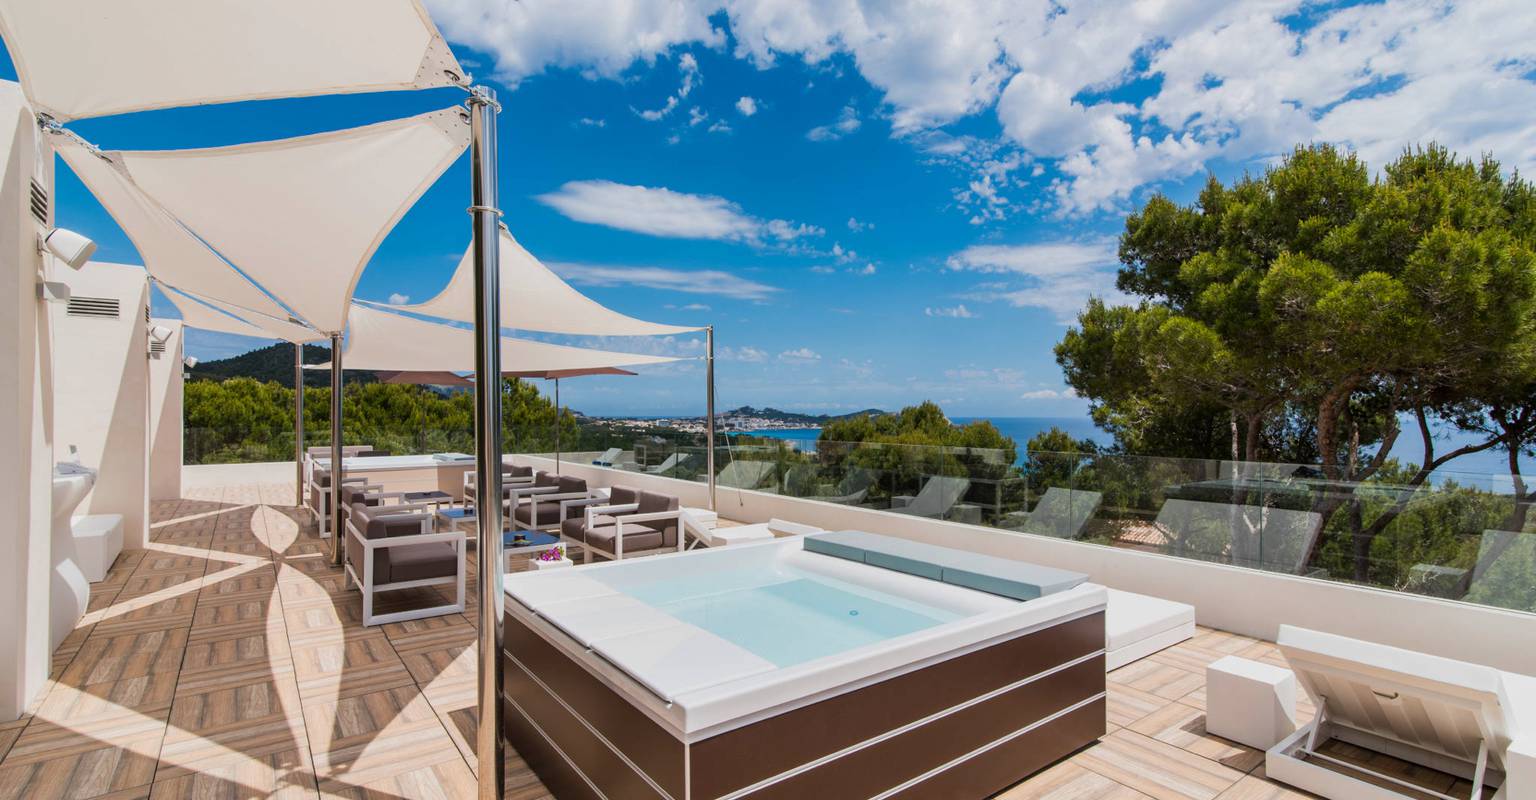 Das paradies in reichweite Hotel Na Taconera Font de Sa Cala, Mallorca